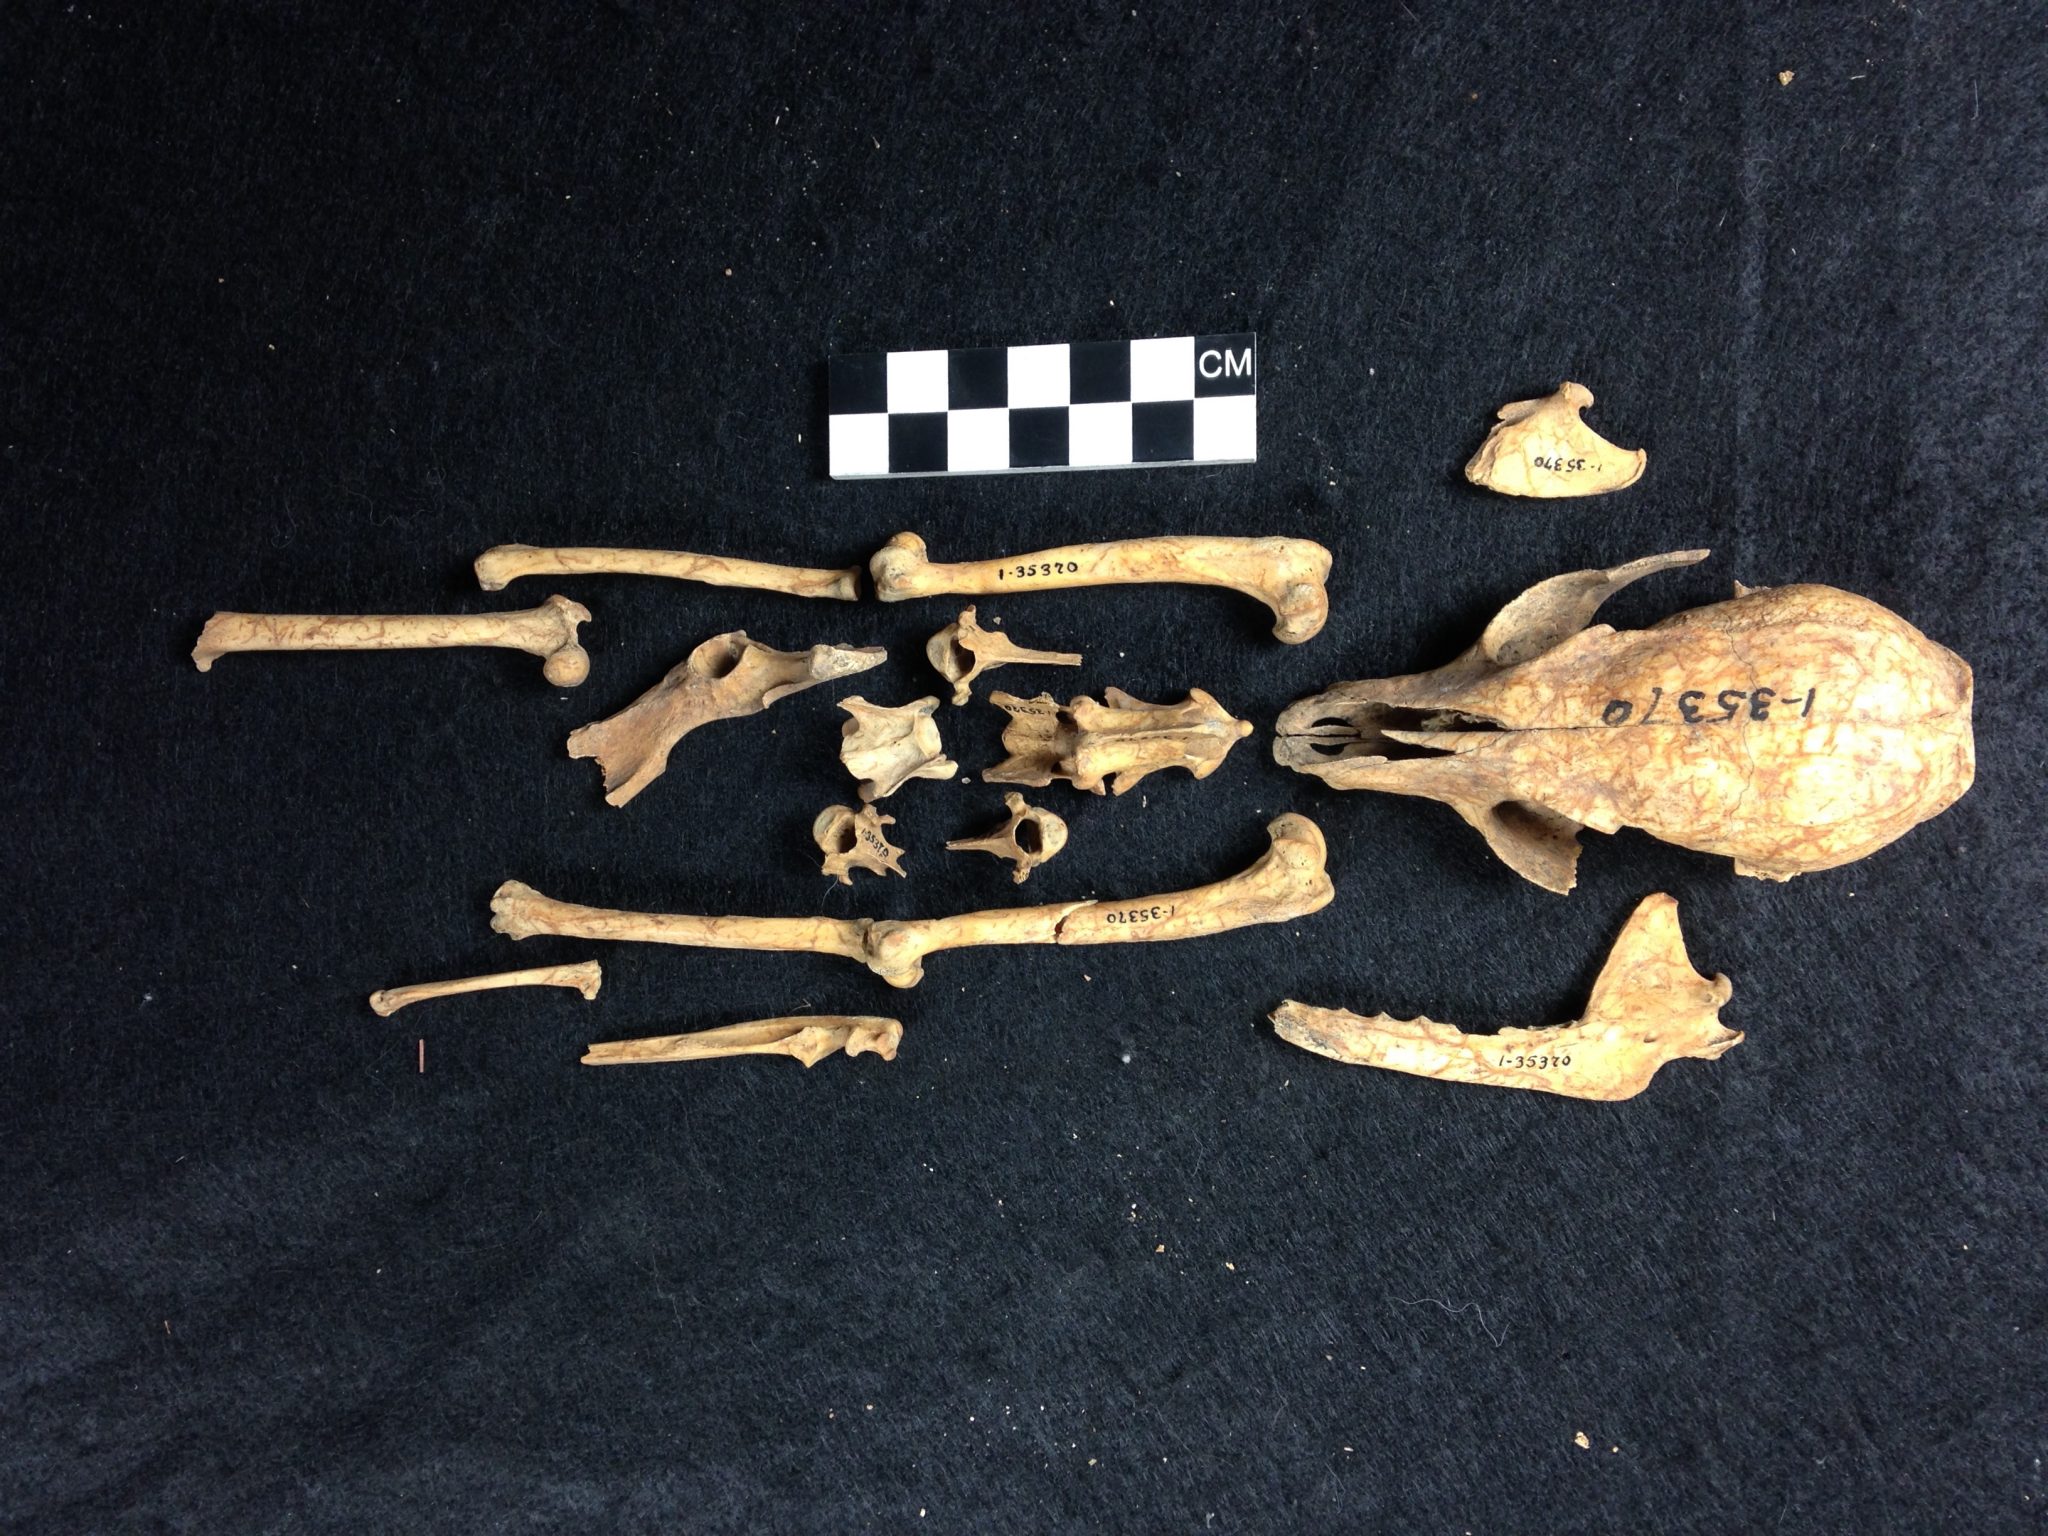 A skeleton of an island fox